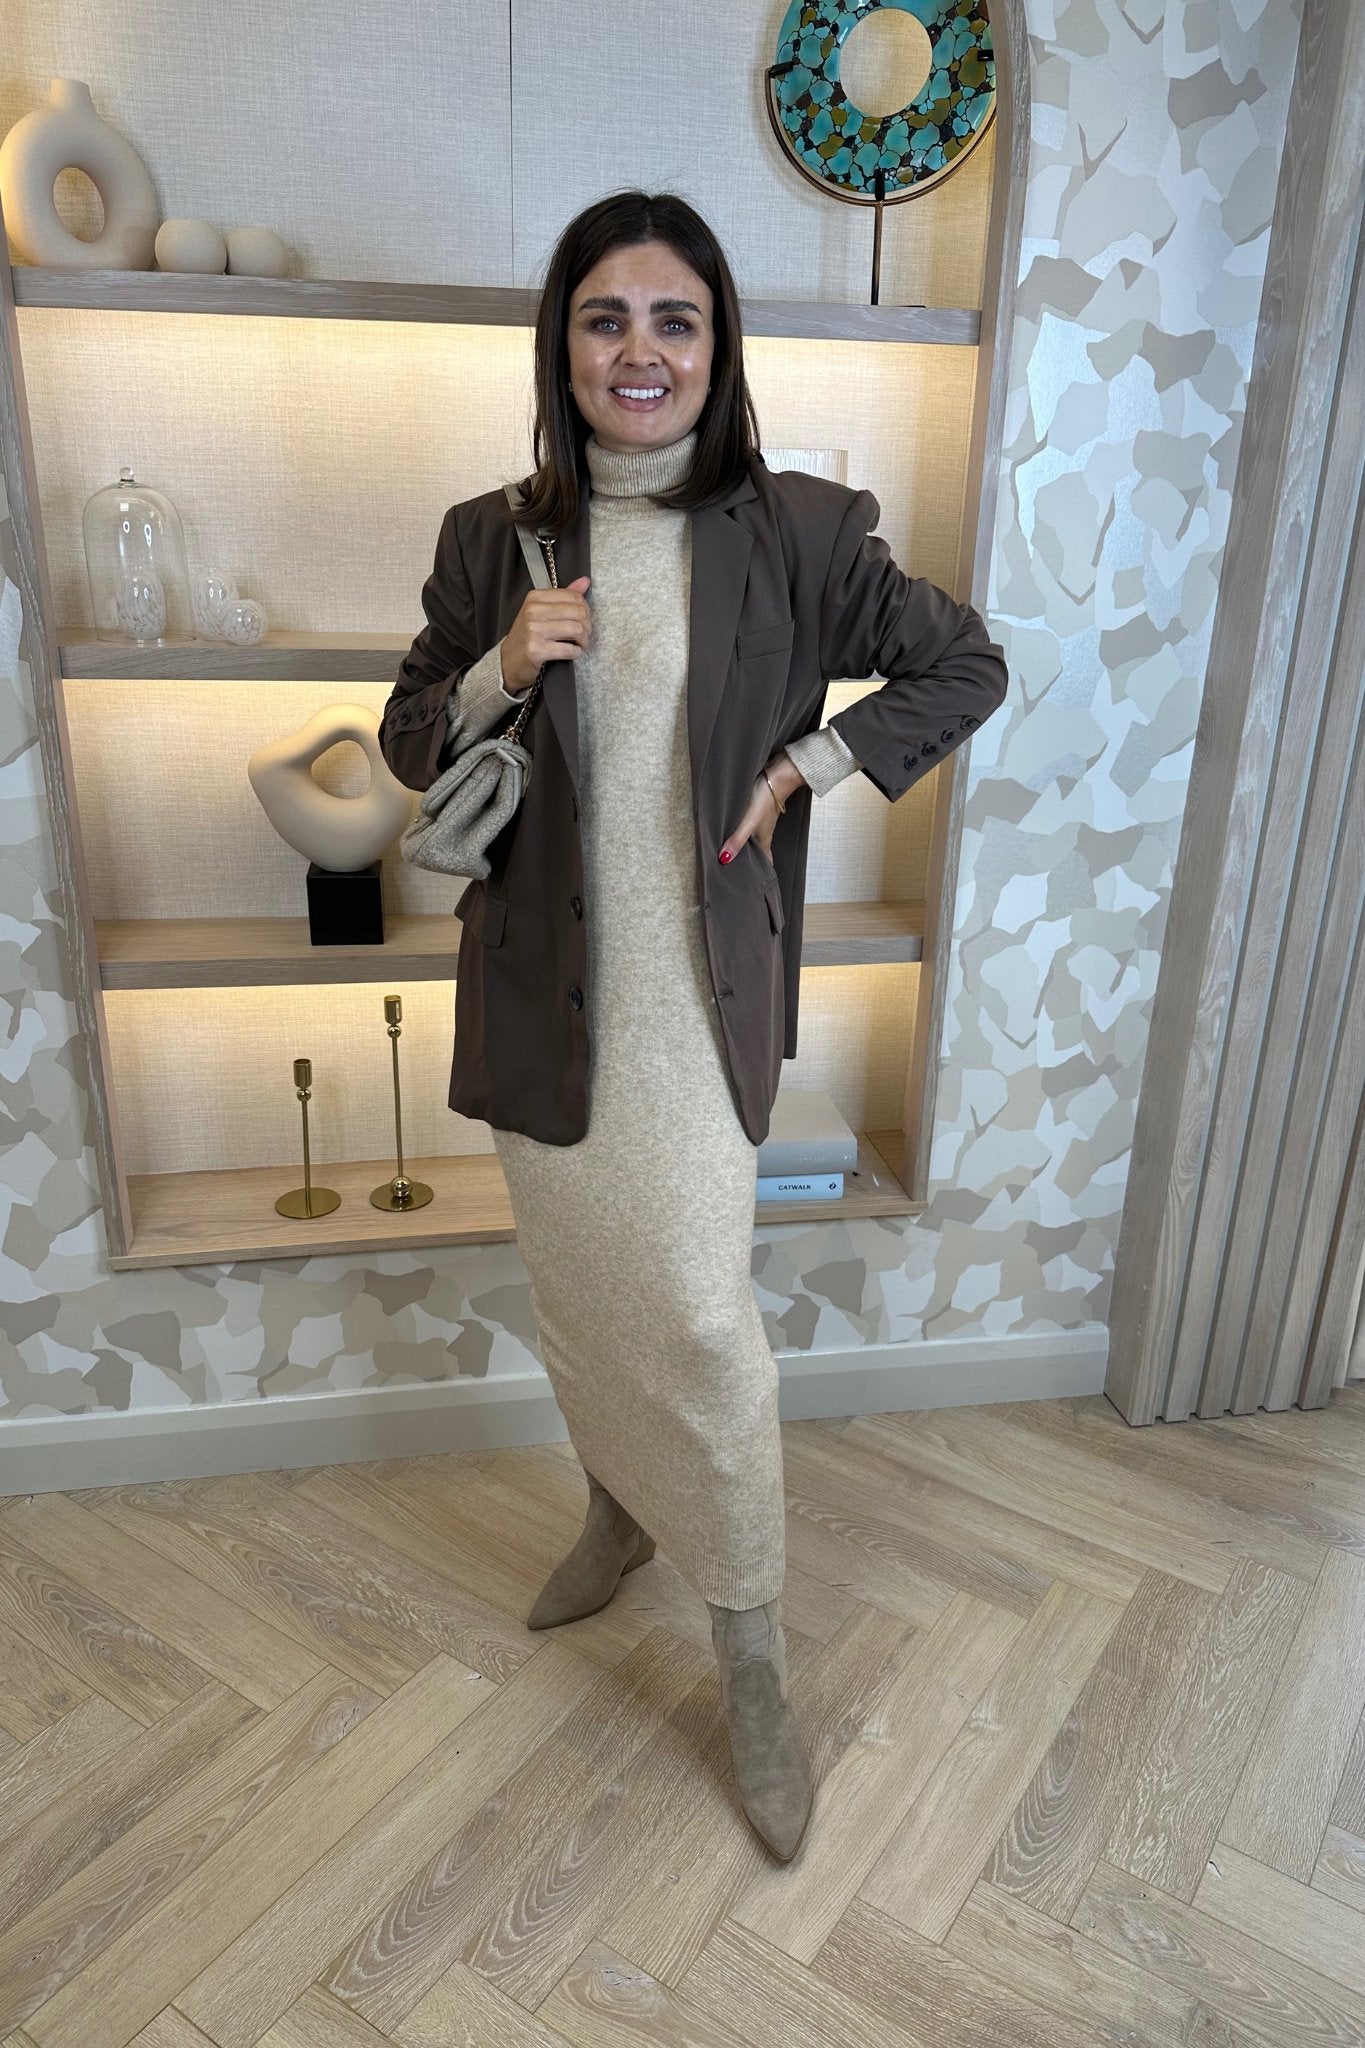 Ally Polo Neck Knit Midi Dress In Beige - The Walk in Wardrobe